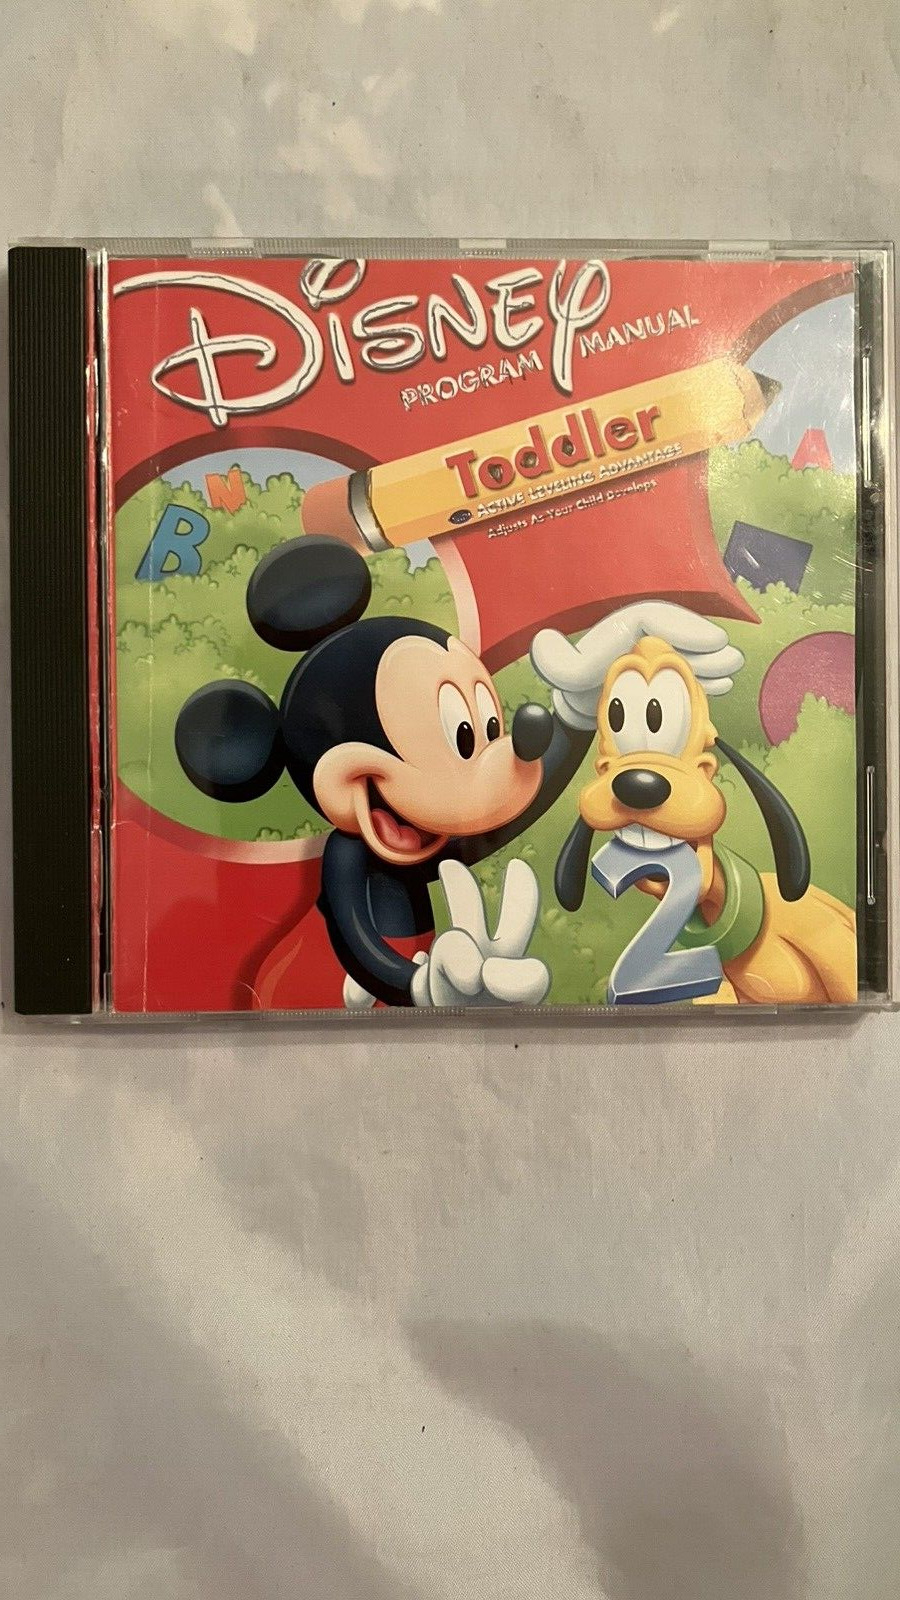 Disney Program Manual Interactive Learning Toddler Pluto Mickey CD-ROM 